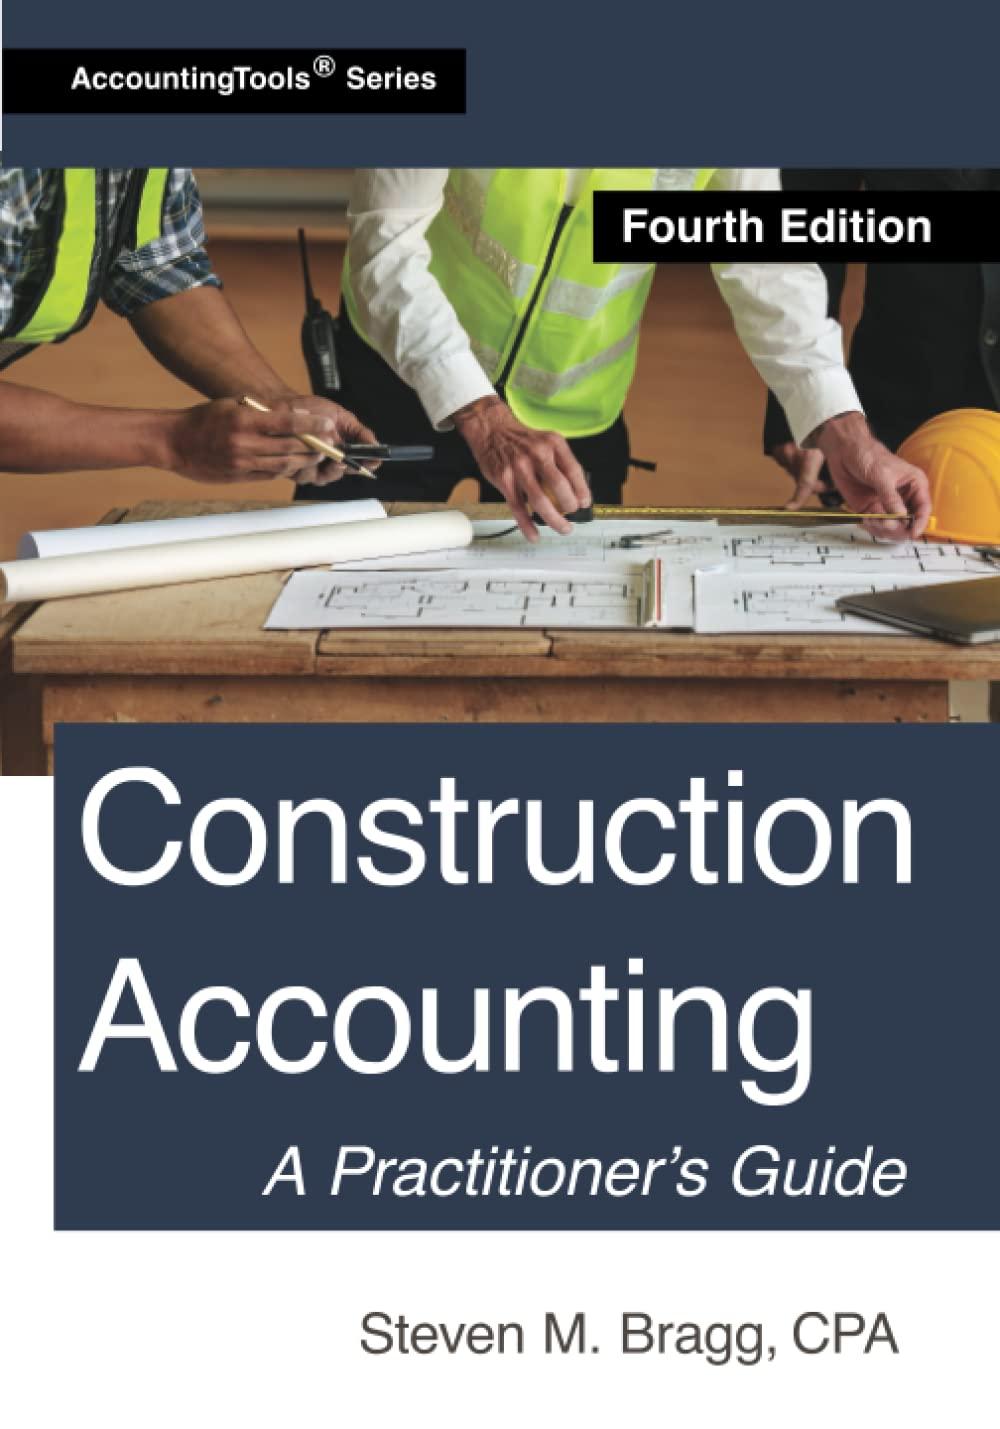 construction accounting 4th edition steven m. bragg 1642211044, 978-1642211047